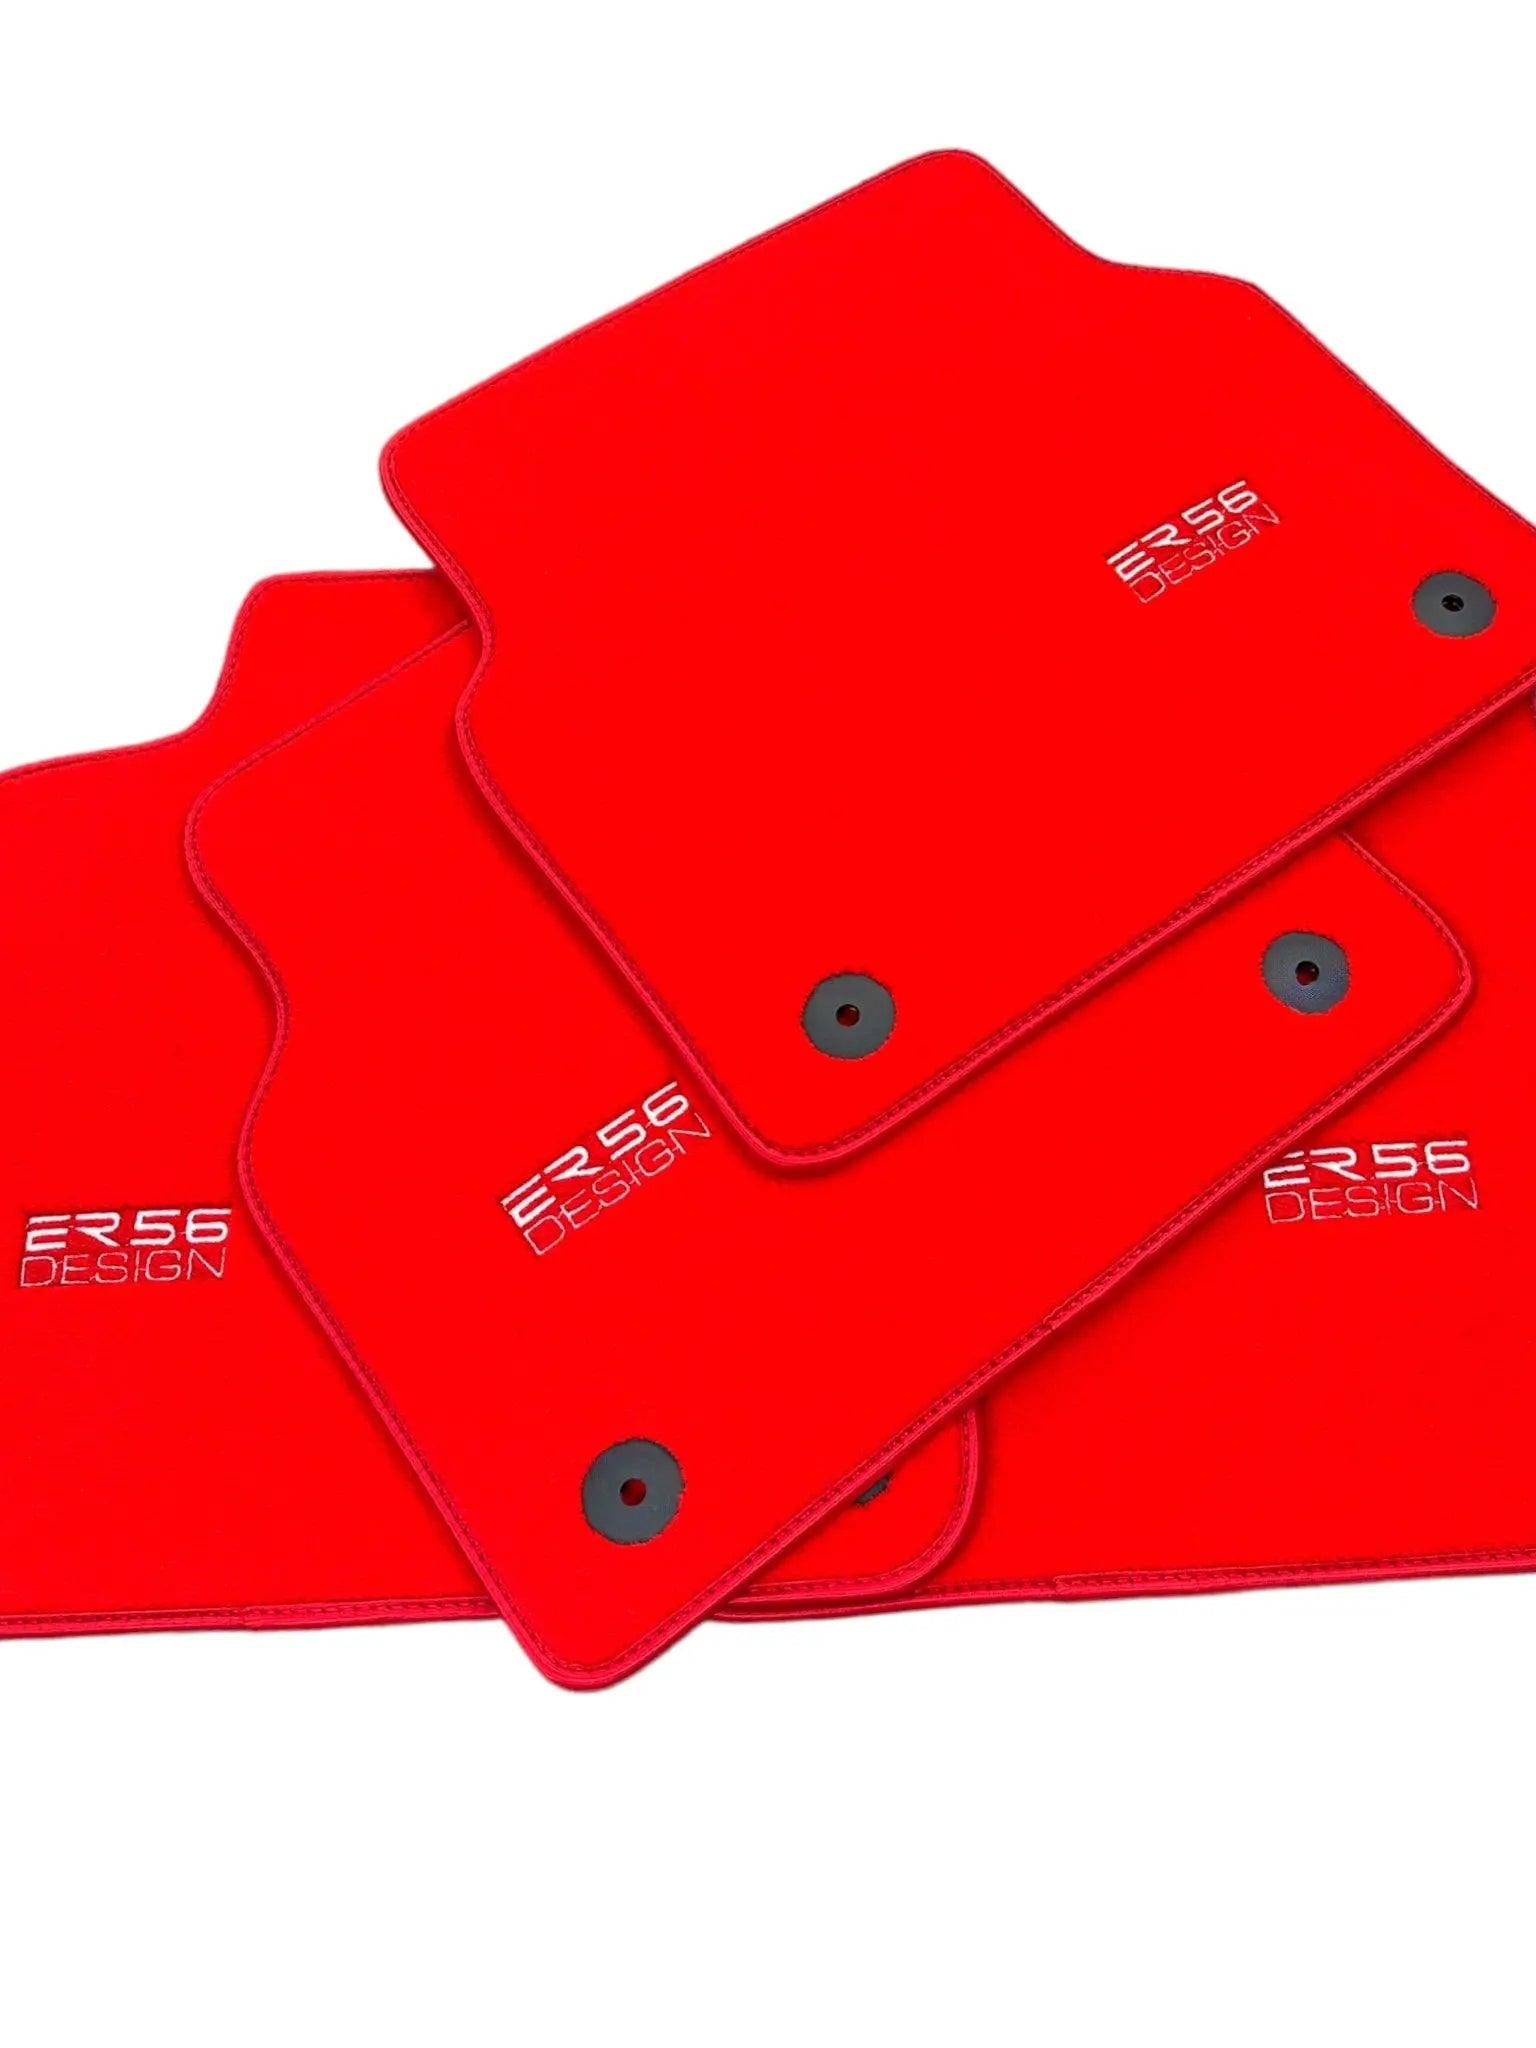 Red Floor Mats for Audi A8 D3 Long (2002-2010) | ER56 Design